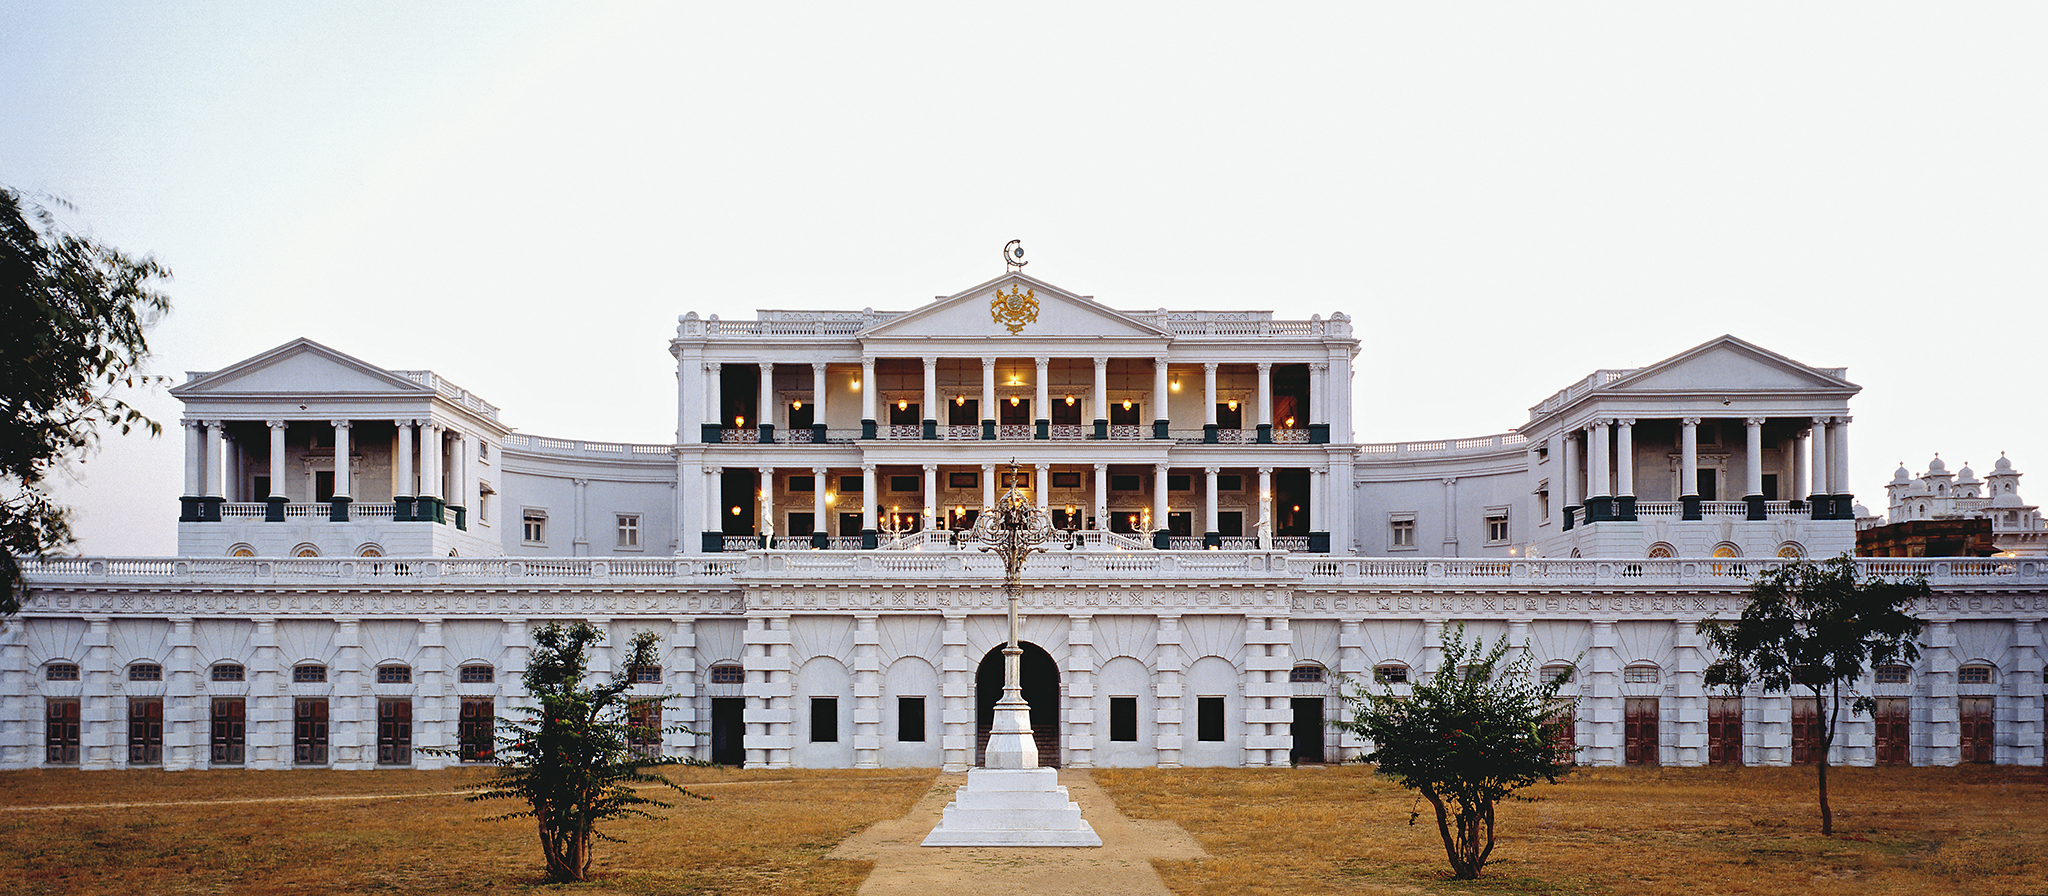 falaknuma palace pre wedding destinations india